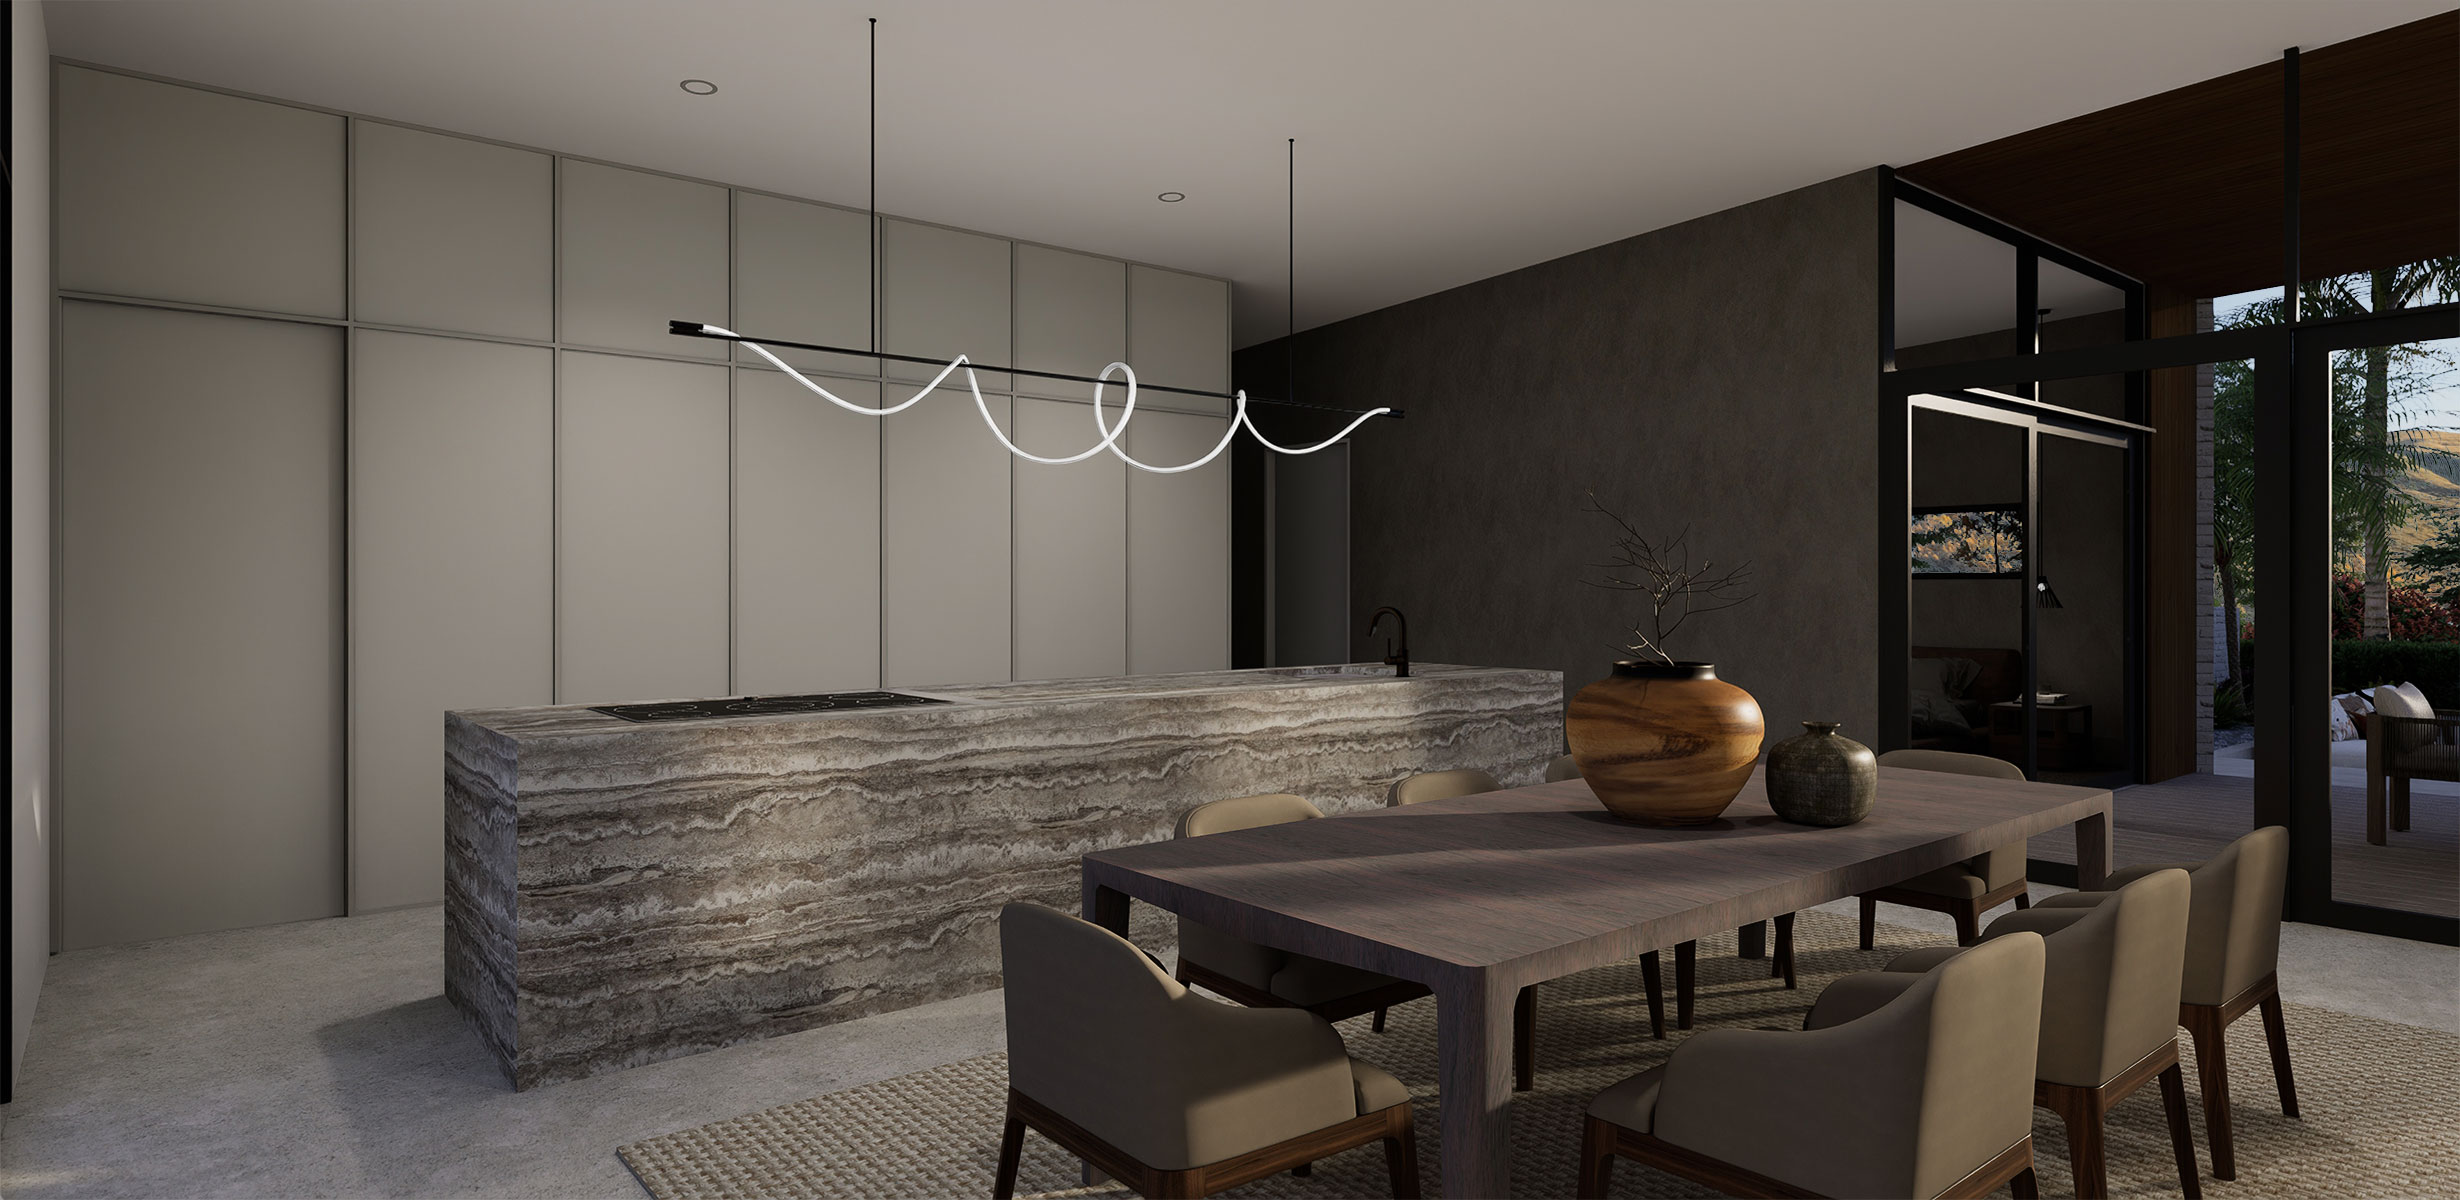 Hallmark Homes Luxury Prestige Series Bremner Bay Kitchen and Dining Room View House Plan Christchurch NZ.